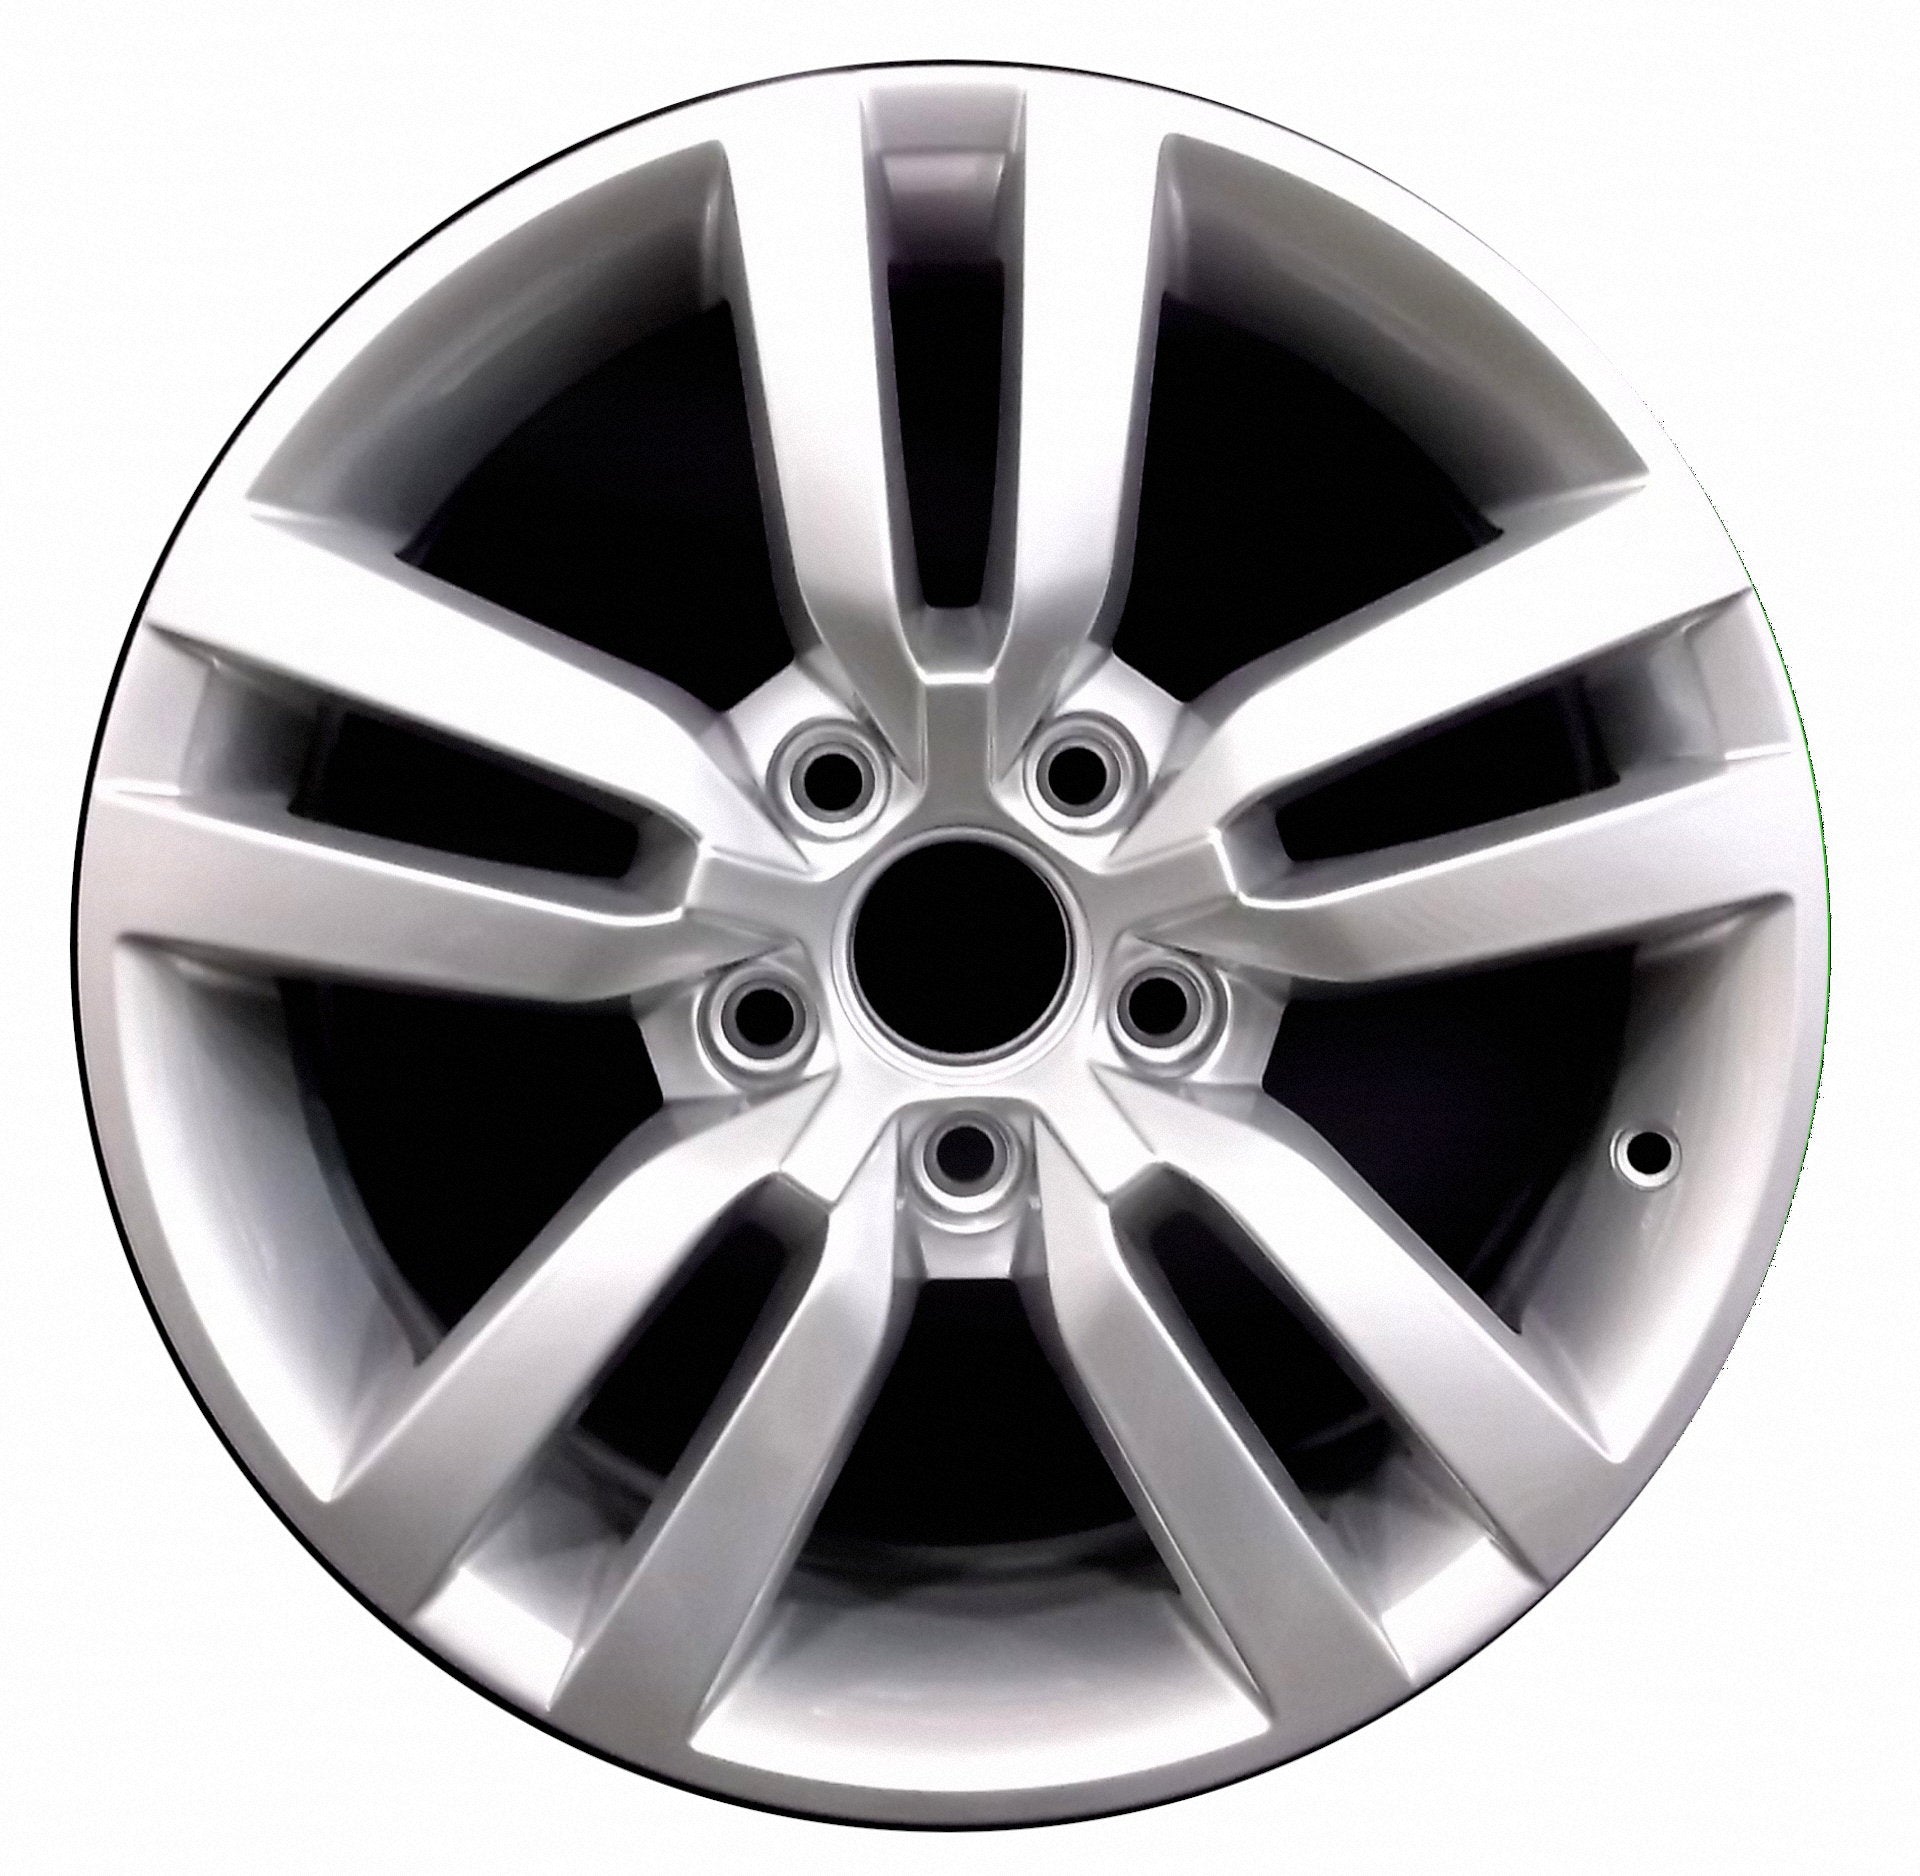 Volkswagen Tiguan  2012, 2013, 2014, 2015, 2016, 2017 Factory OEM Car Wheel Size 16x6.5 Alloy WAO.69934.LS09.FF